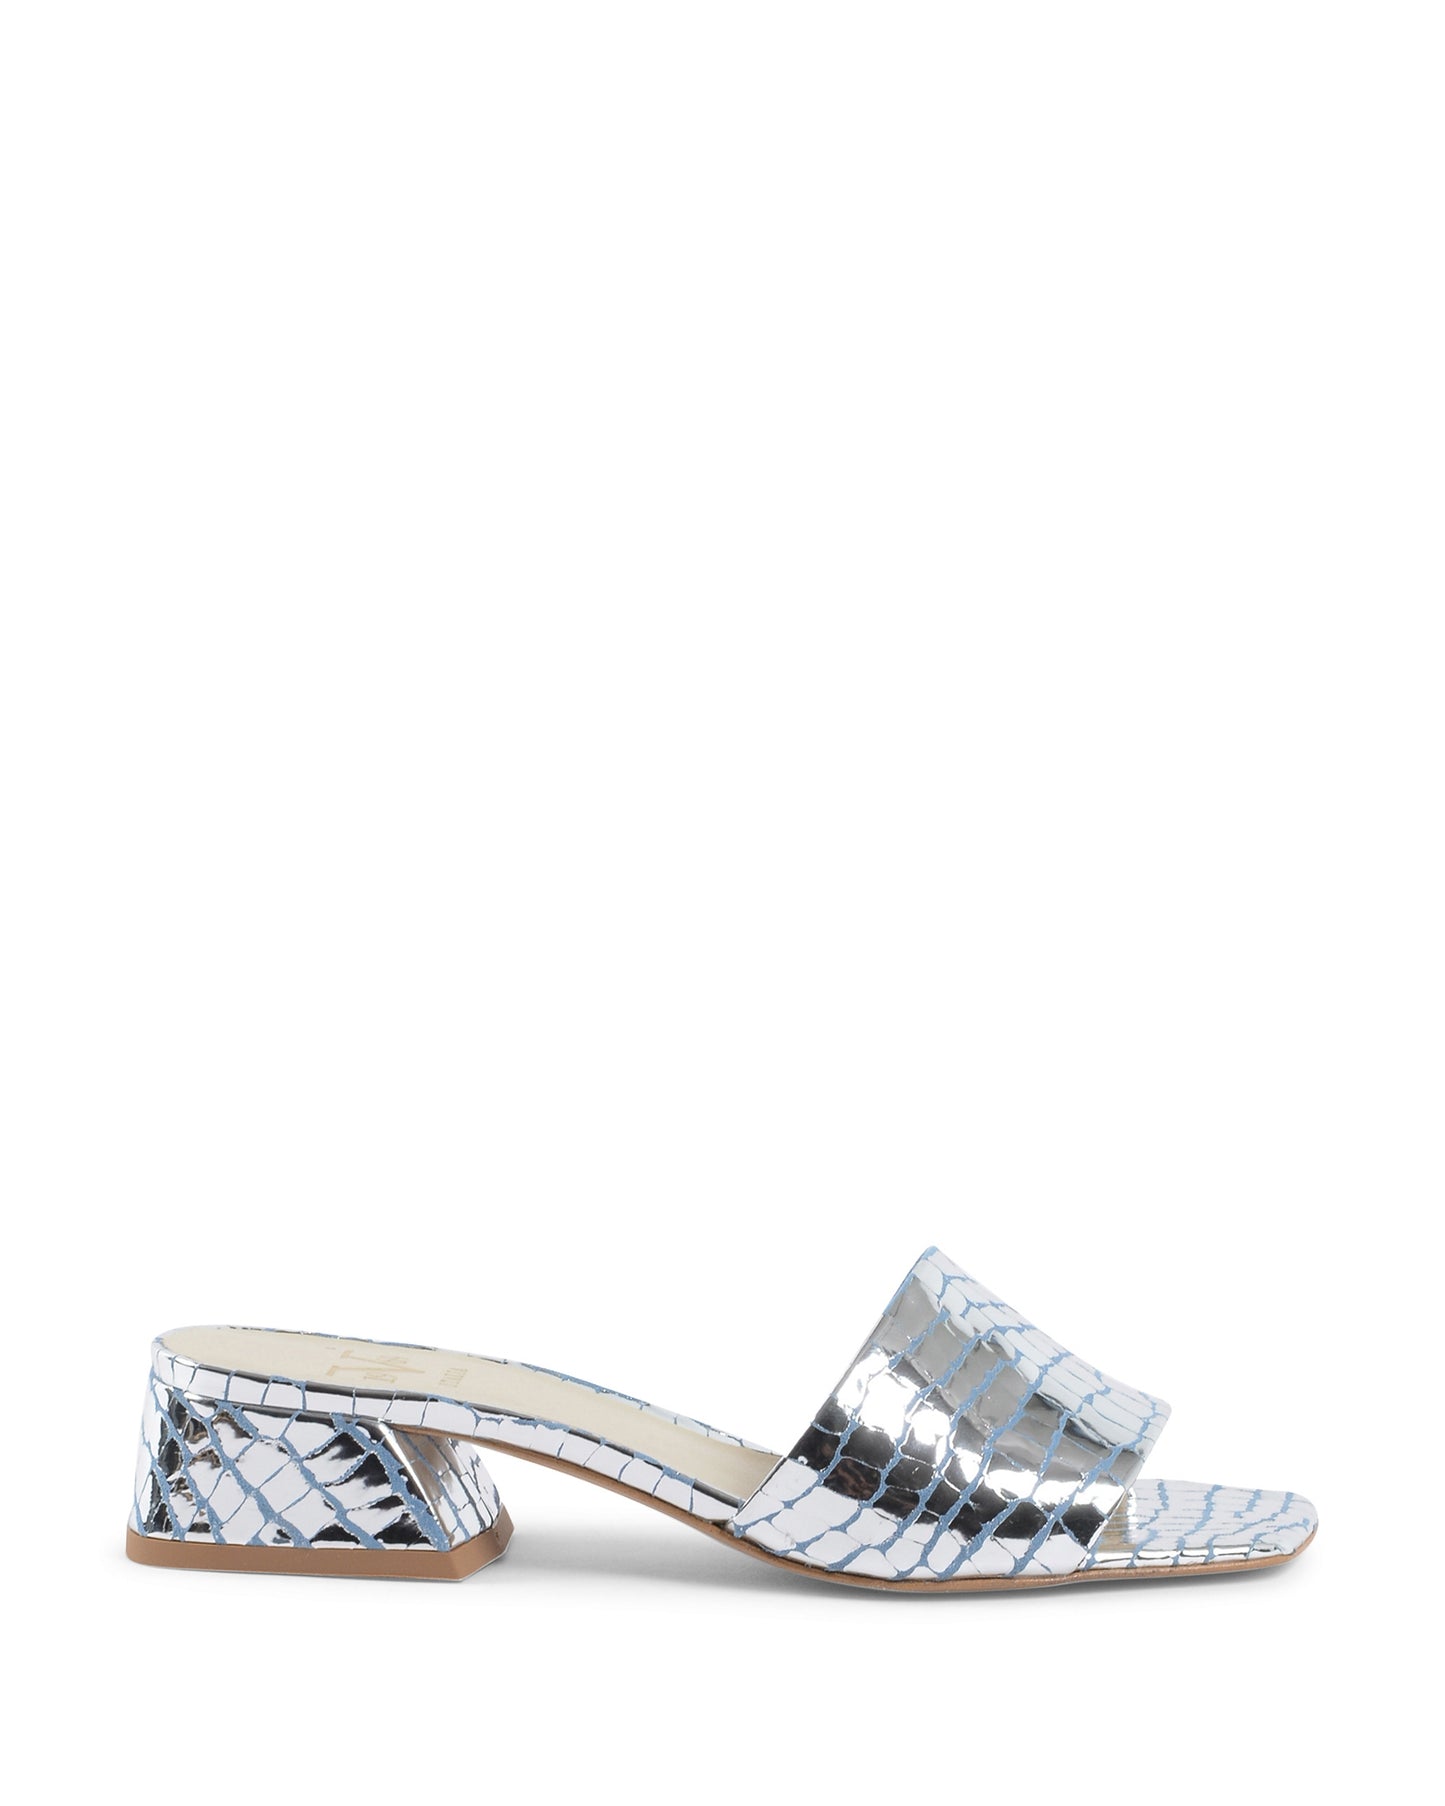 19V69 Italia Womens Sandal Silver NEPER PITONE CELESTE ARGENTO